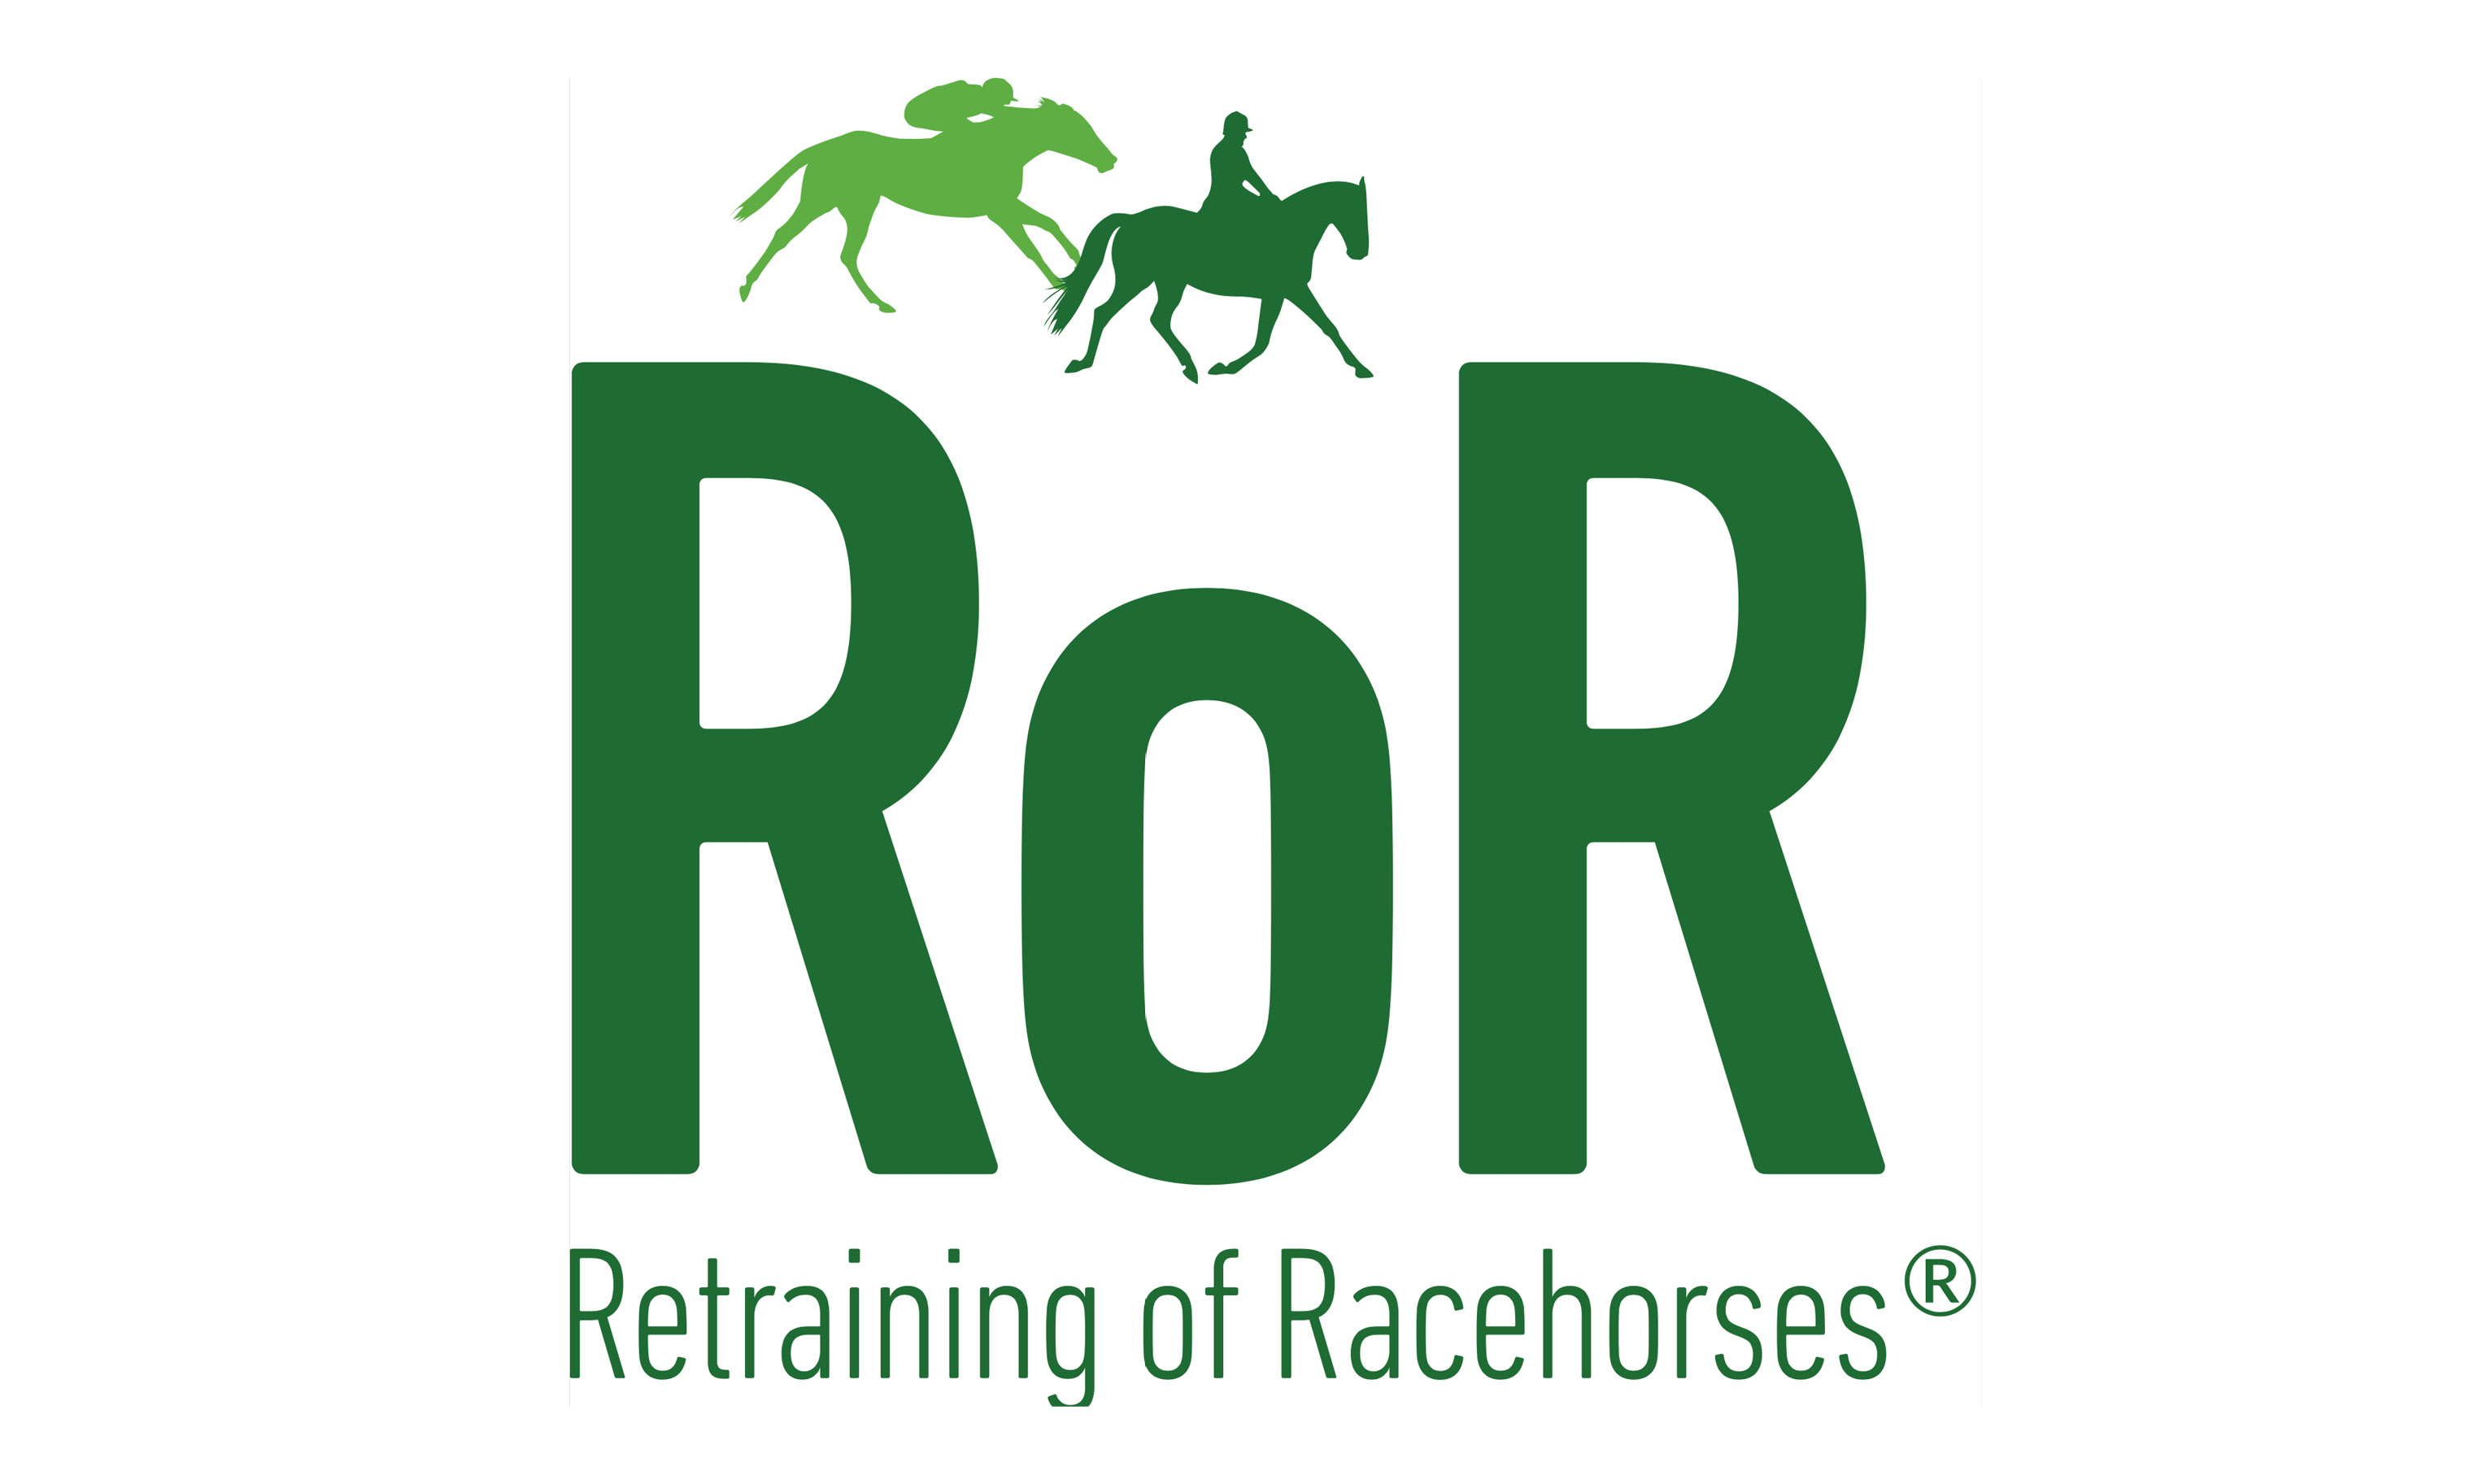 retraining of racehorses logo